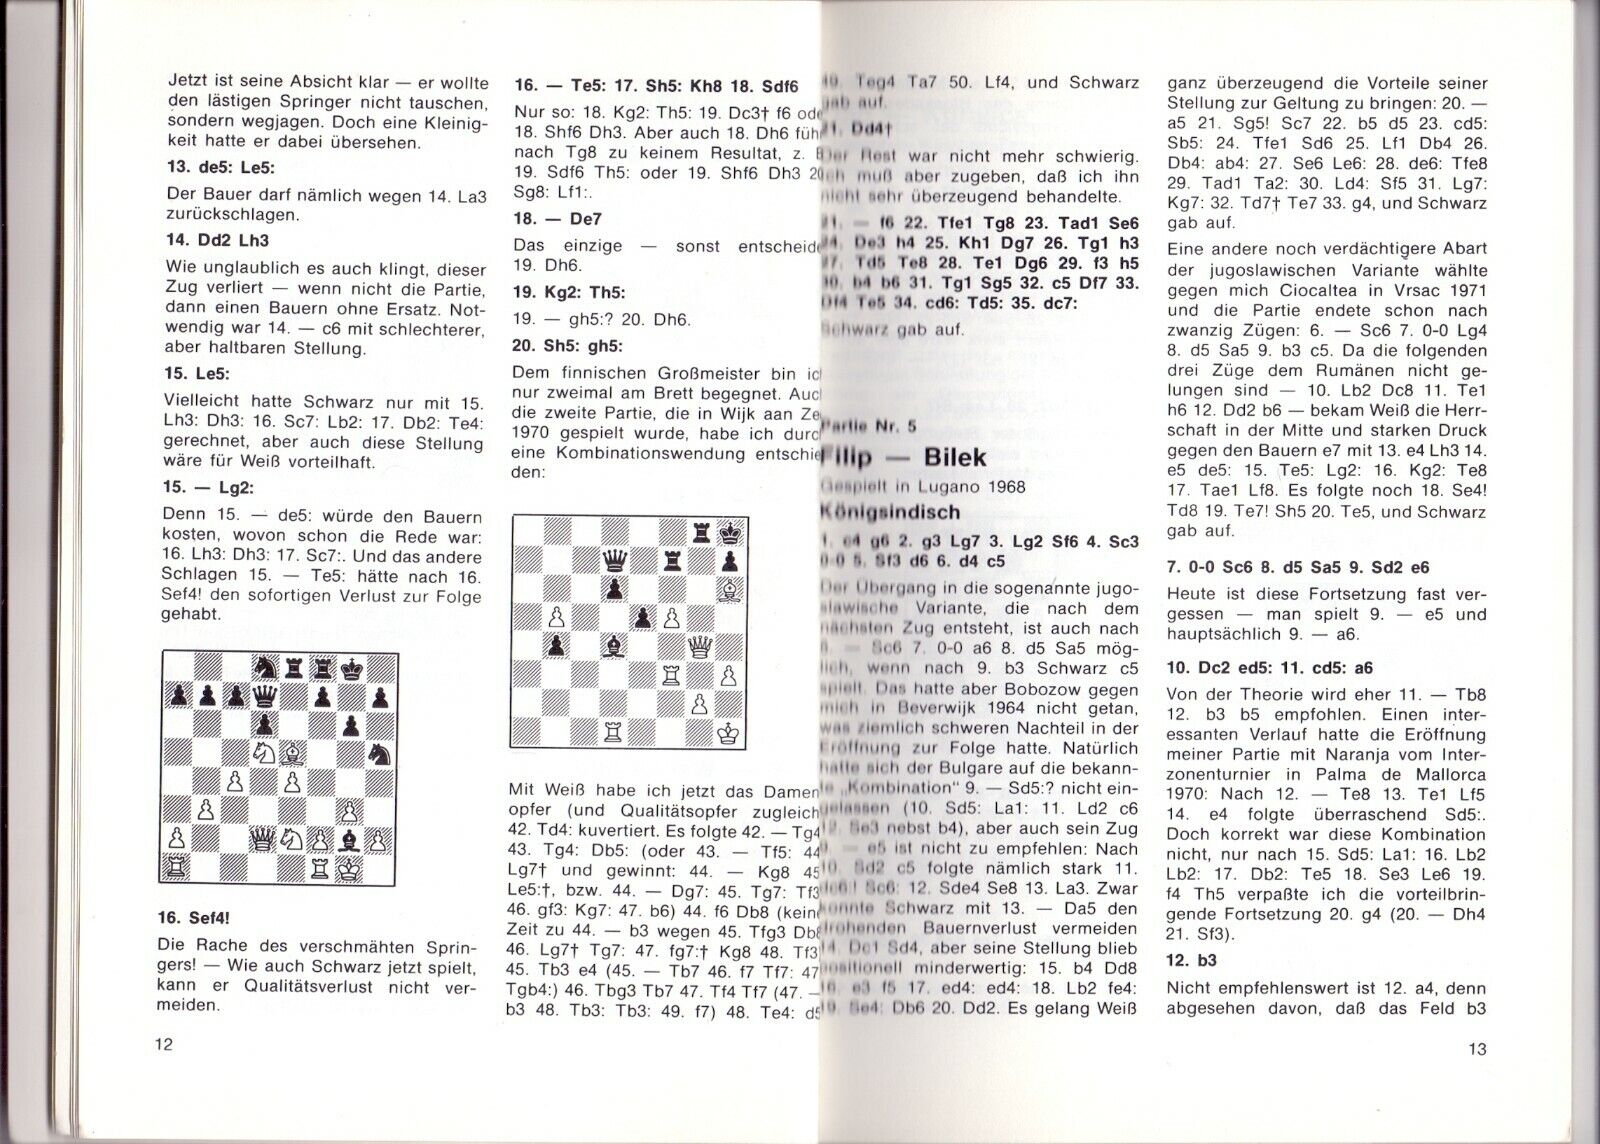 11007.Chess Book in German signed by Filip. 1983. Baturinsky-Karpov library